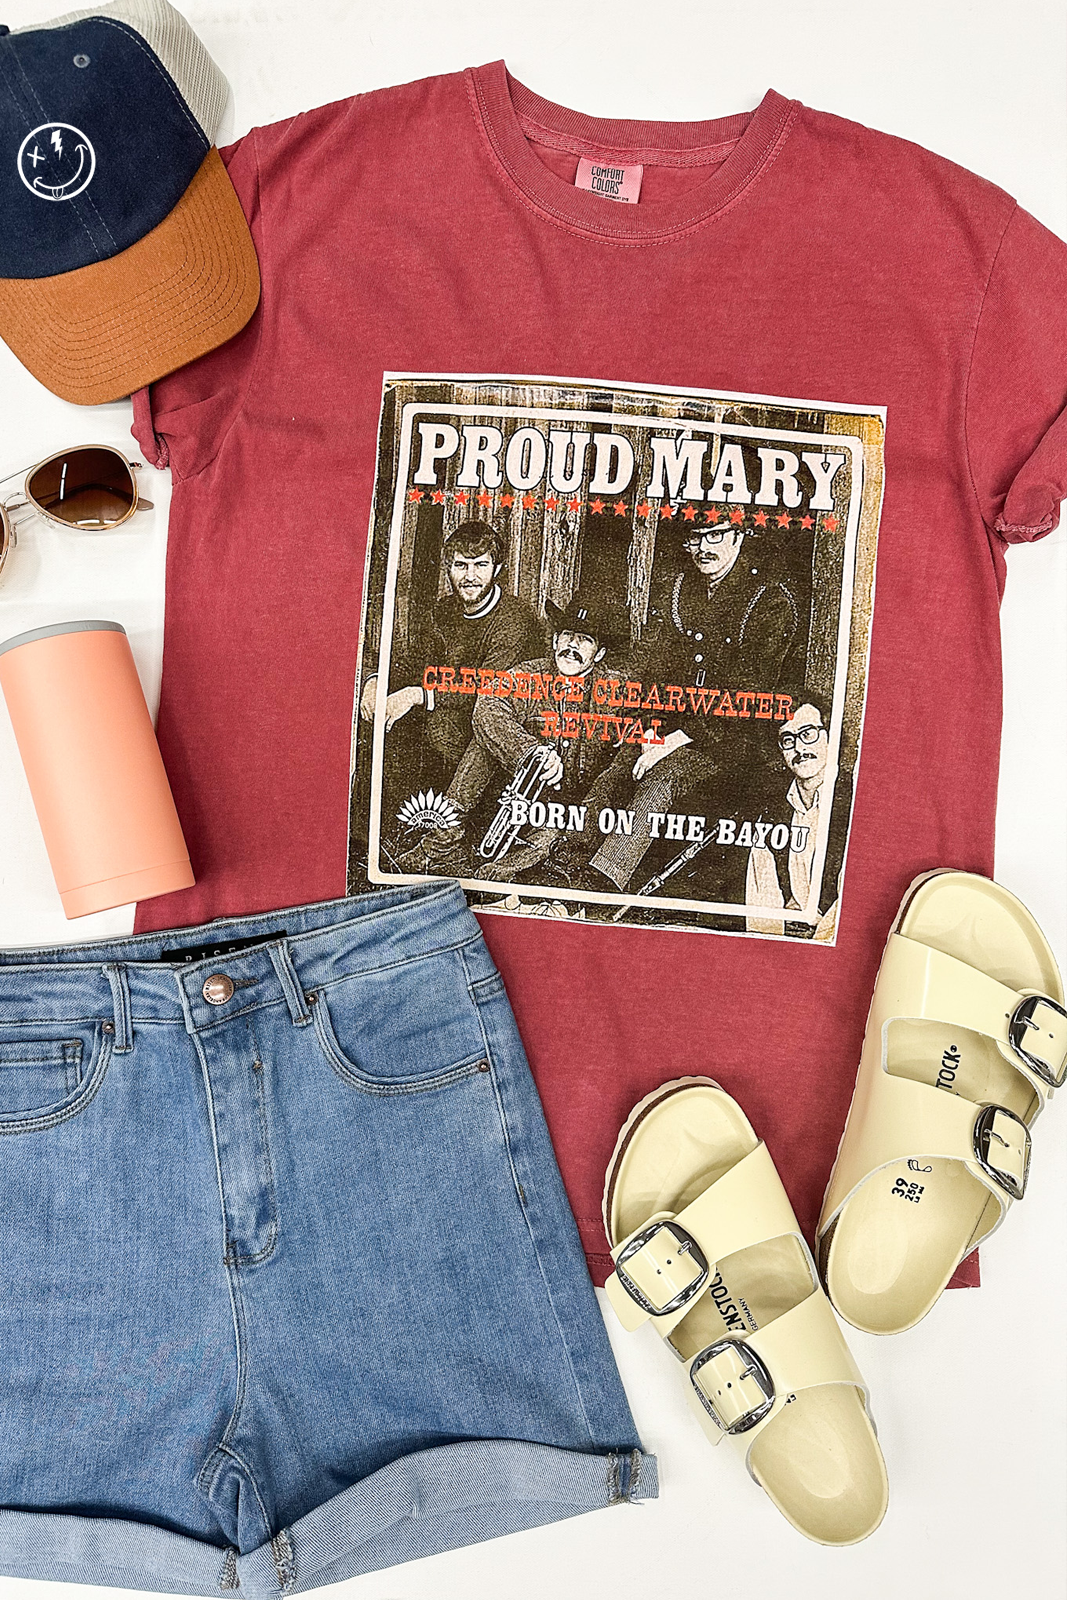 Proud Mary Pigment Dyed Color Comfort Tee/Sweatshirt